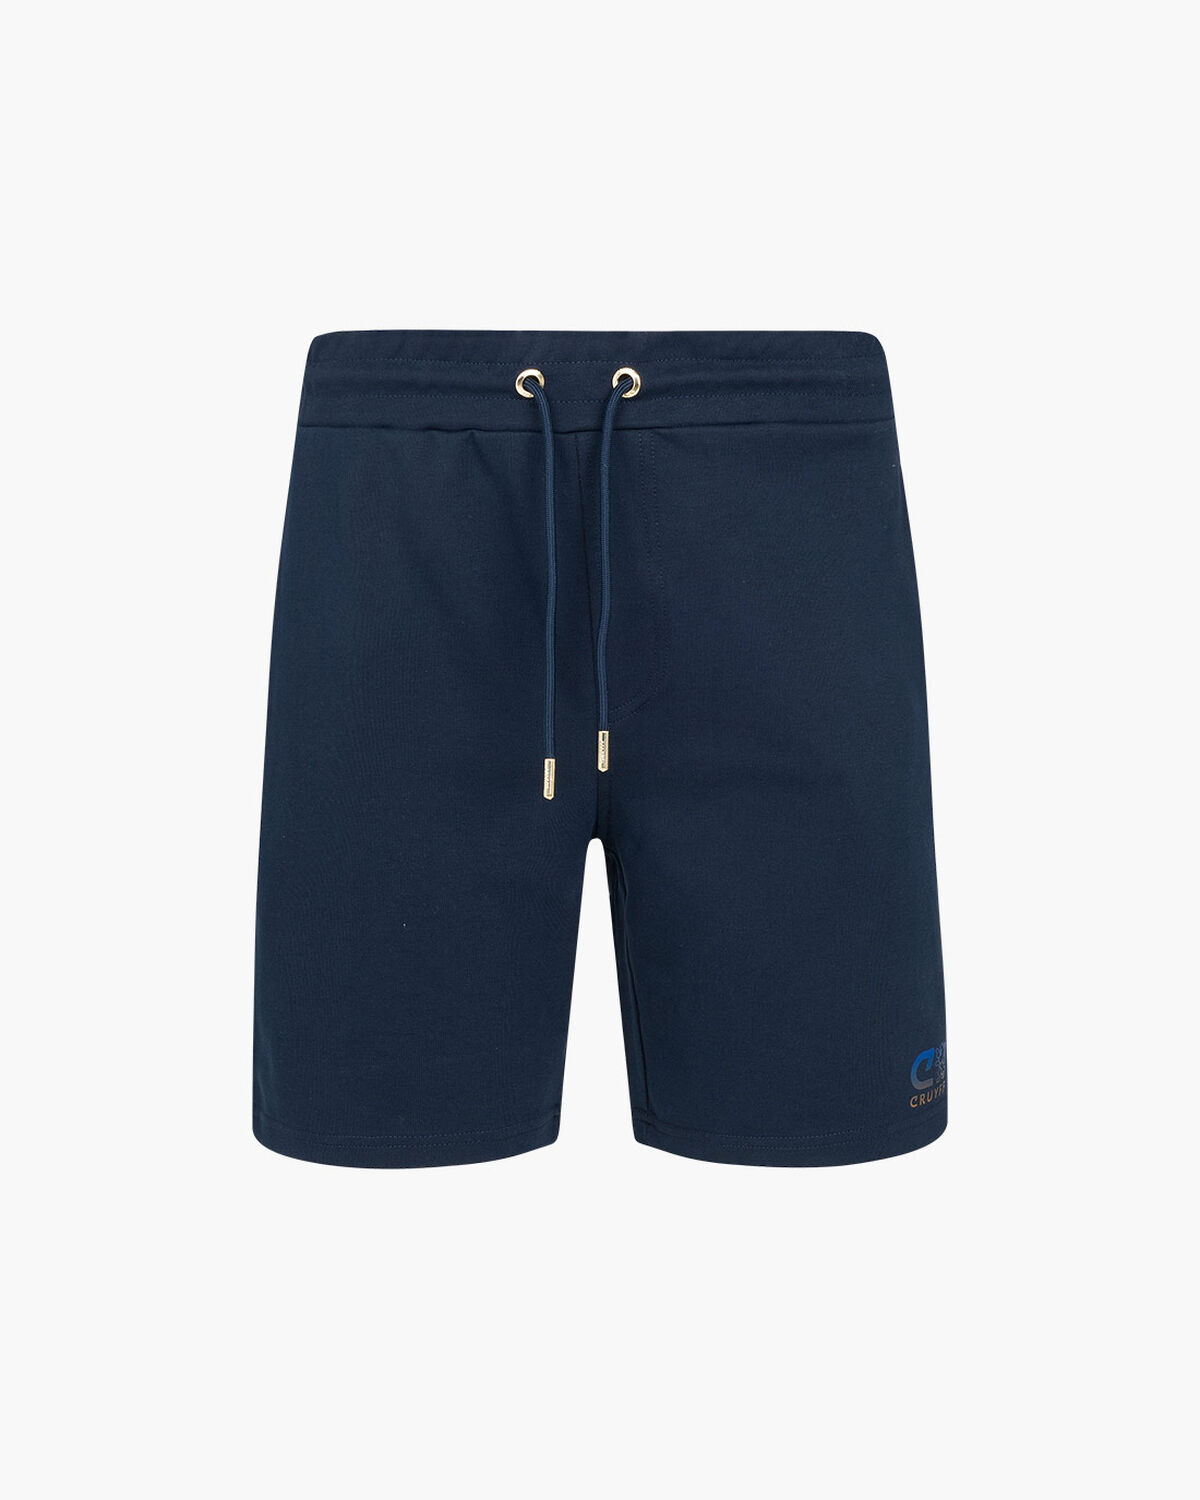 Caton Shorts, Navy, hi-res